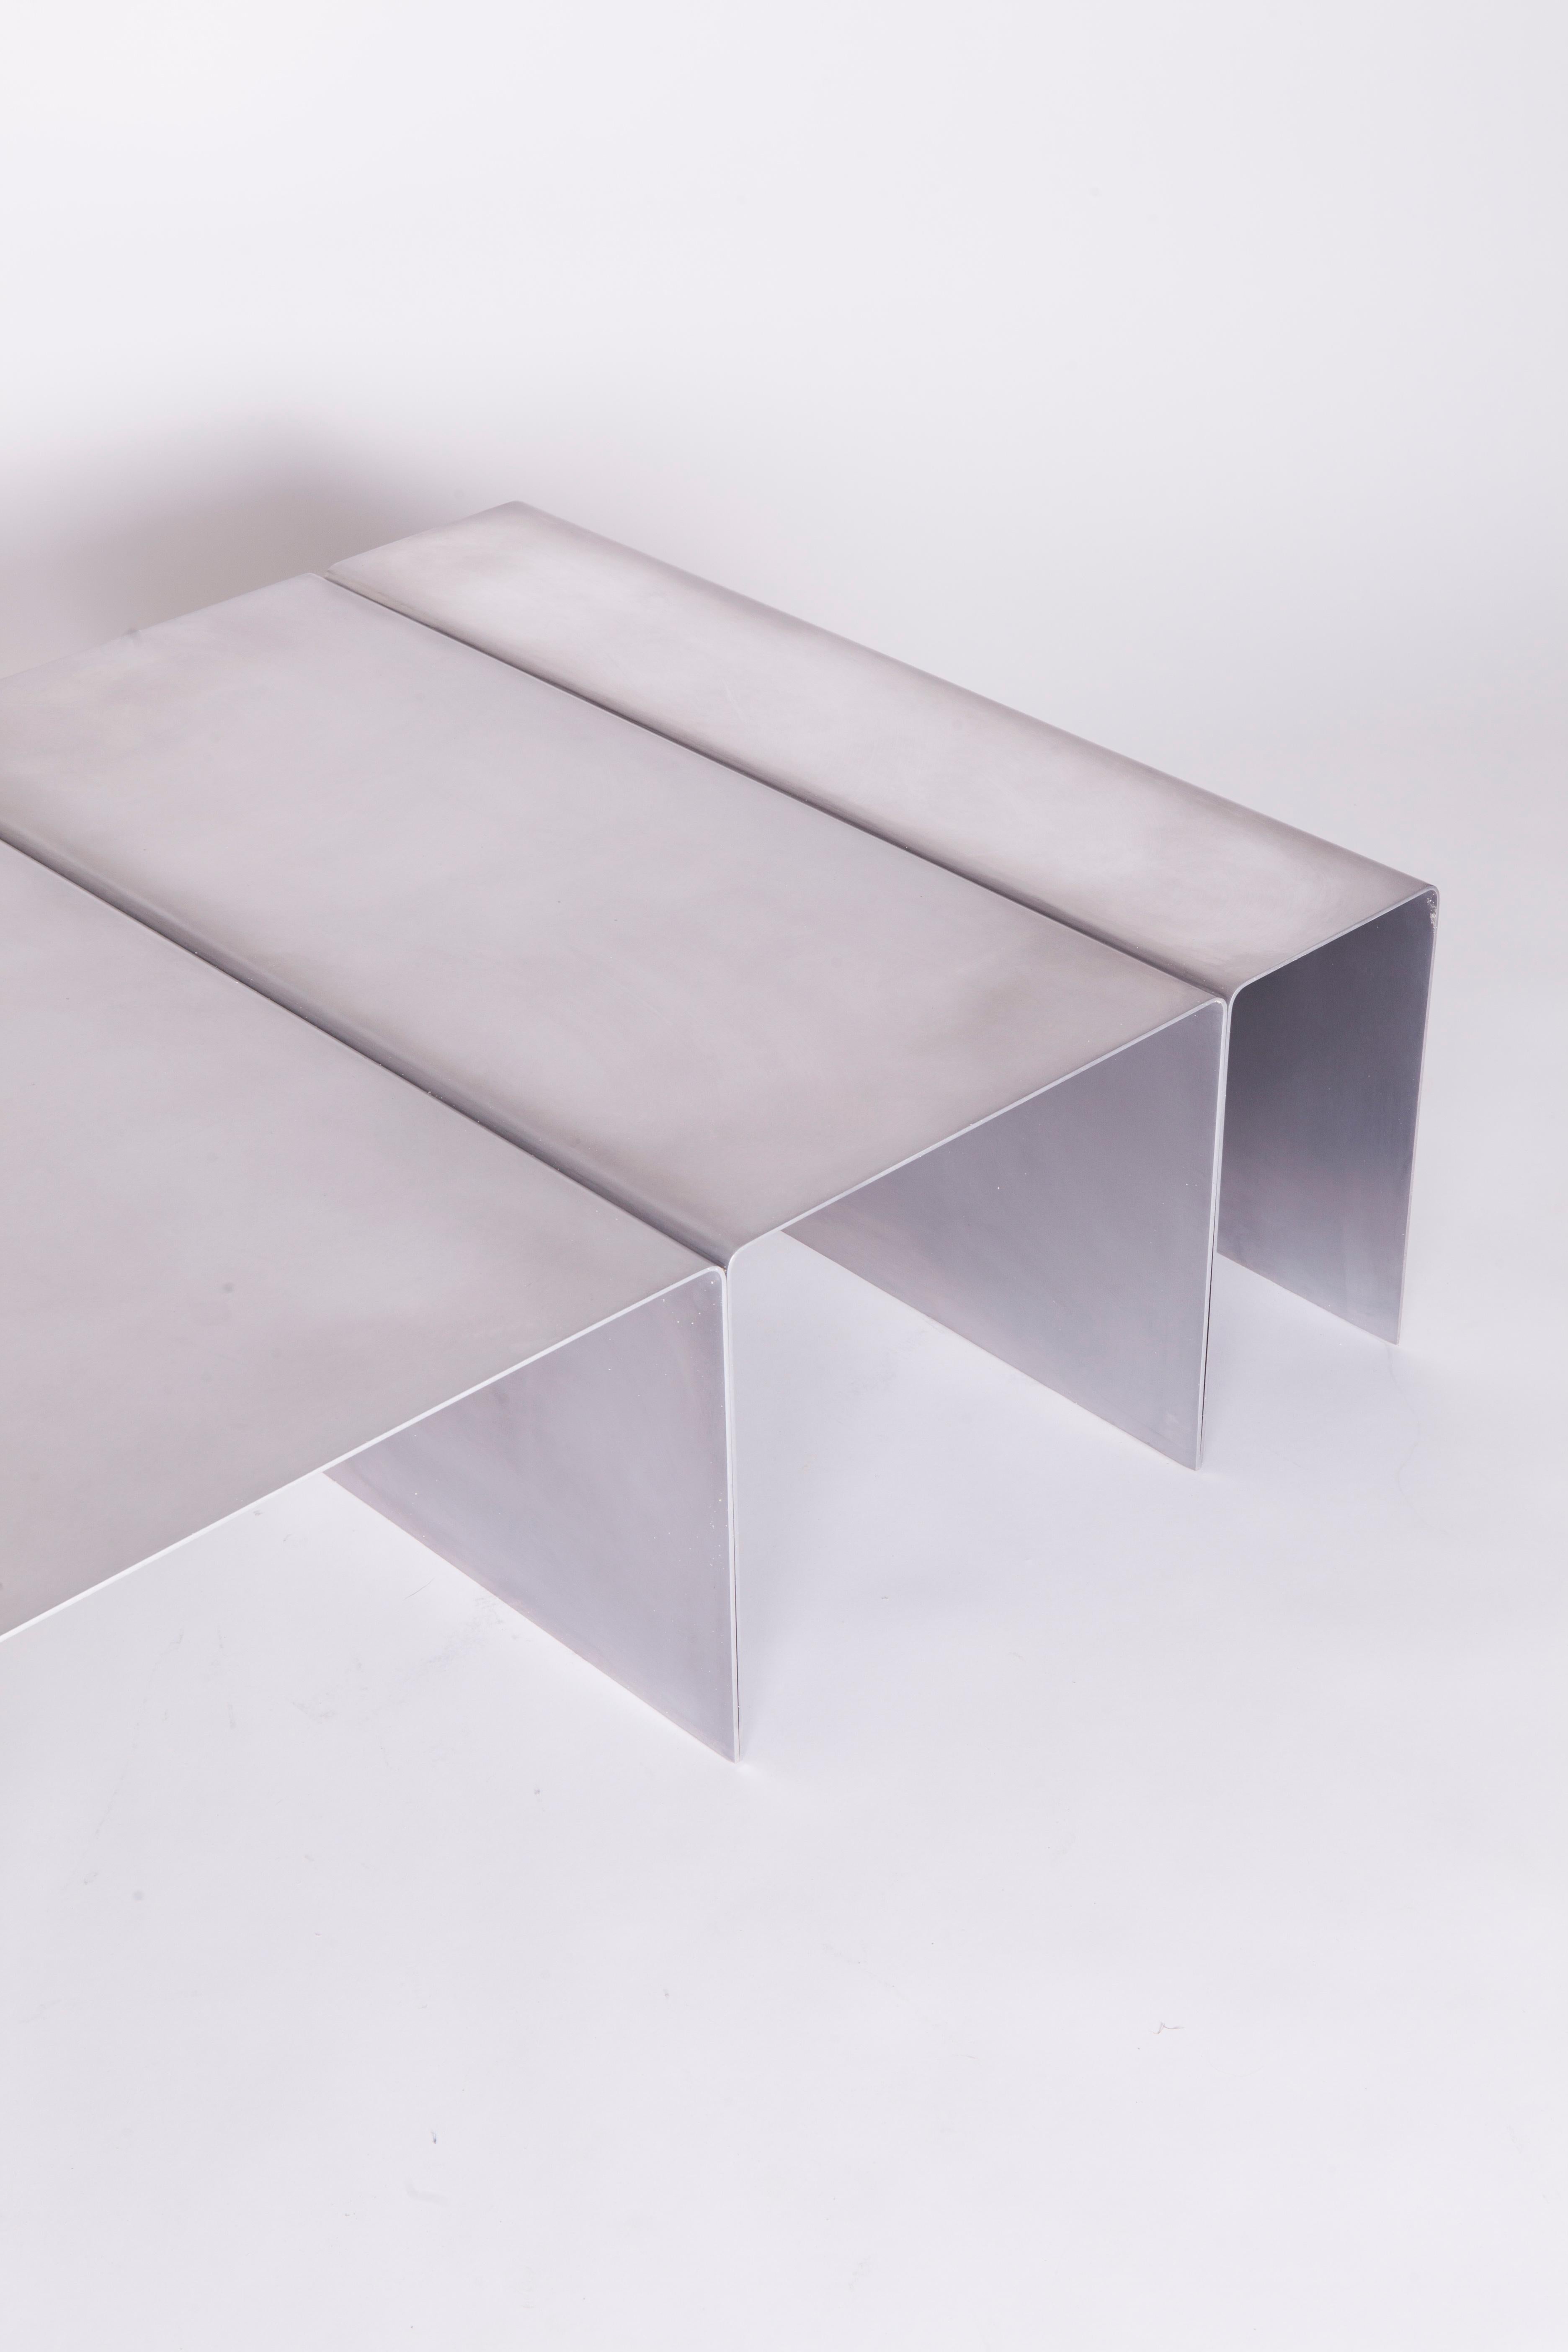 American SEGMENT Coffee Table in Waxed Aluminum by Estudio Persona